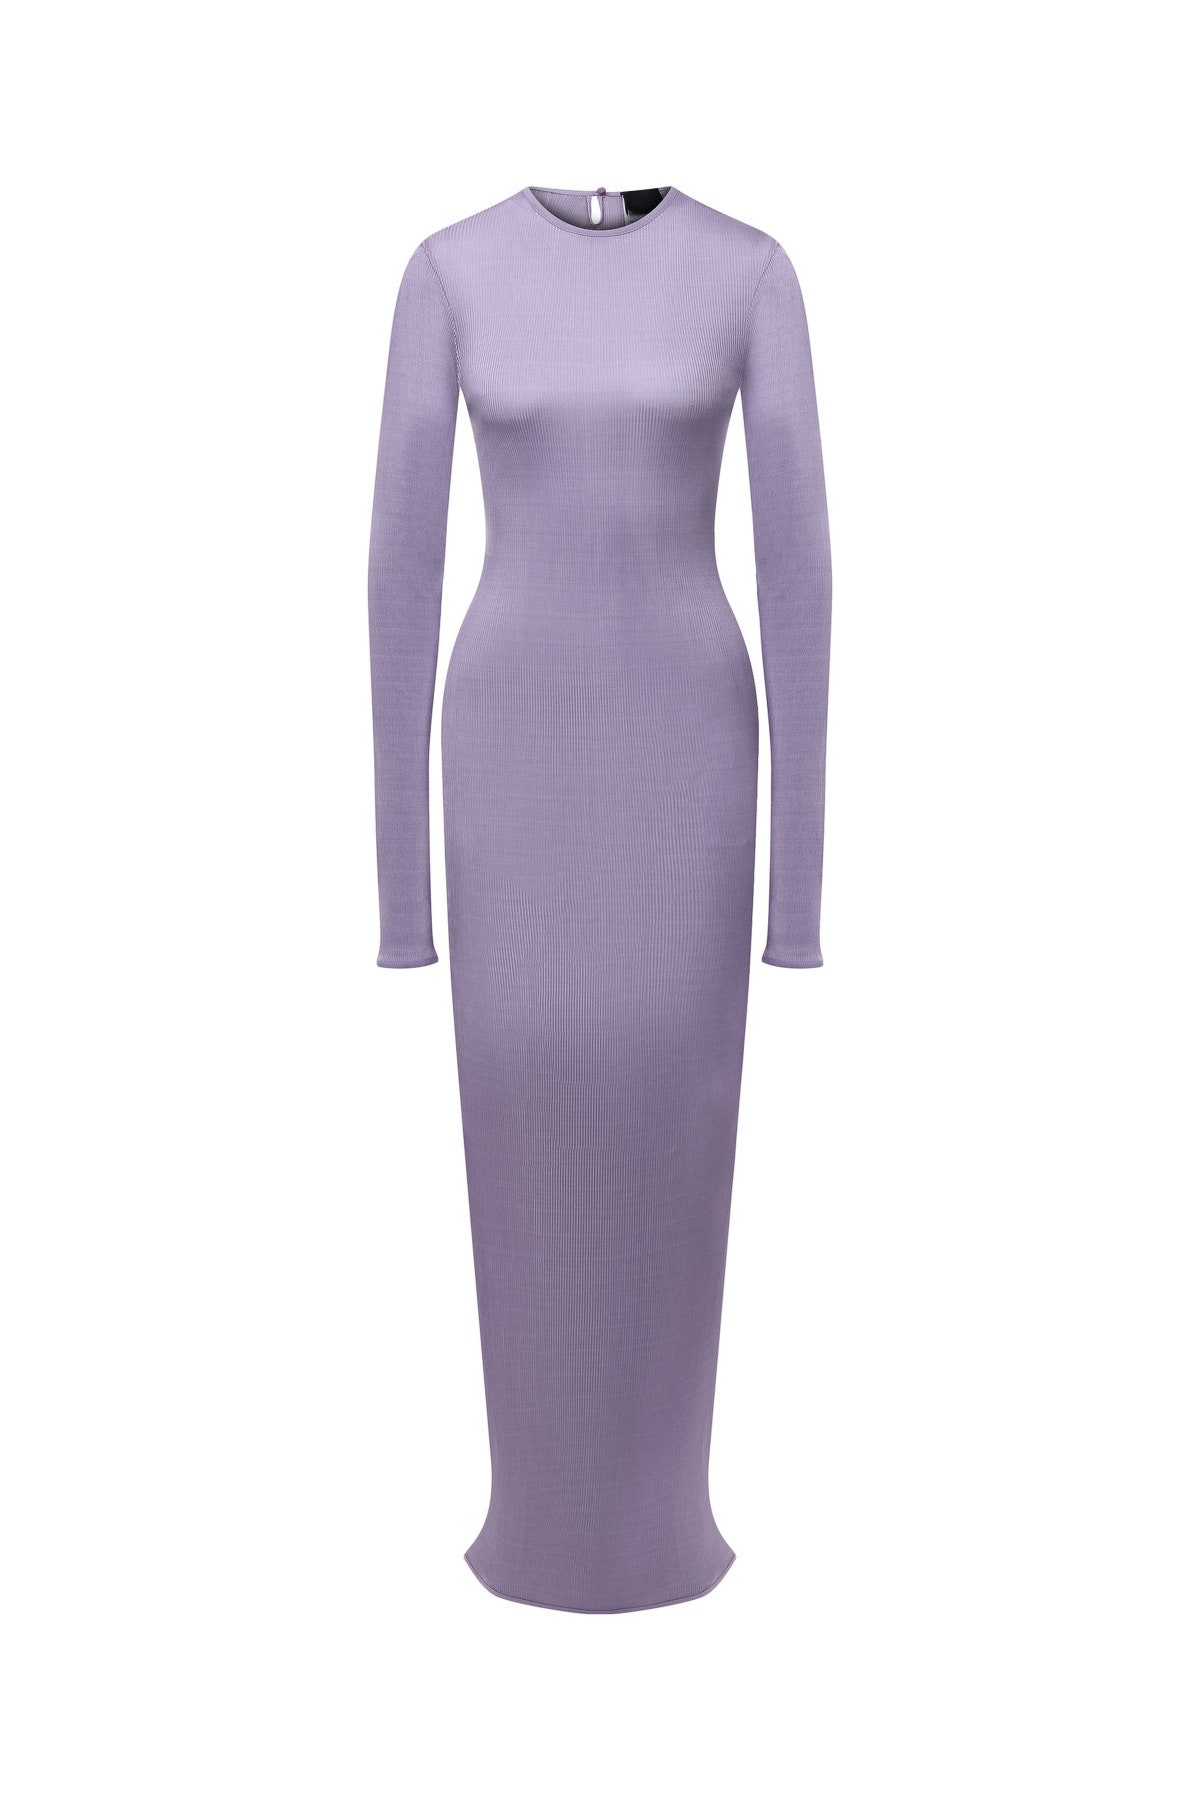 Платье Givenchy 171 500 рублей tsum.ru